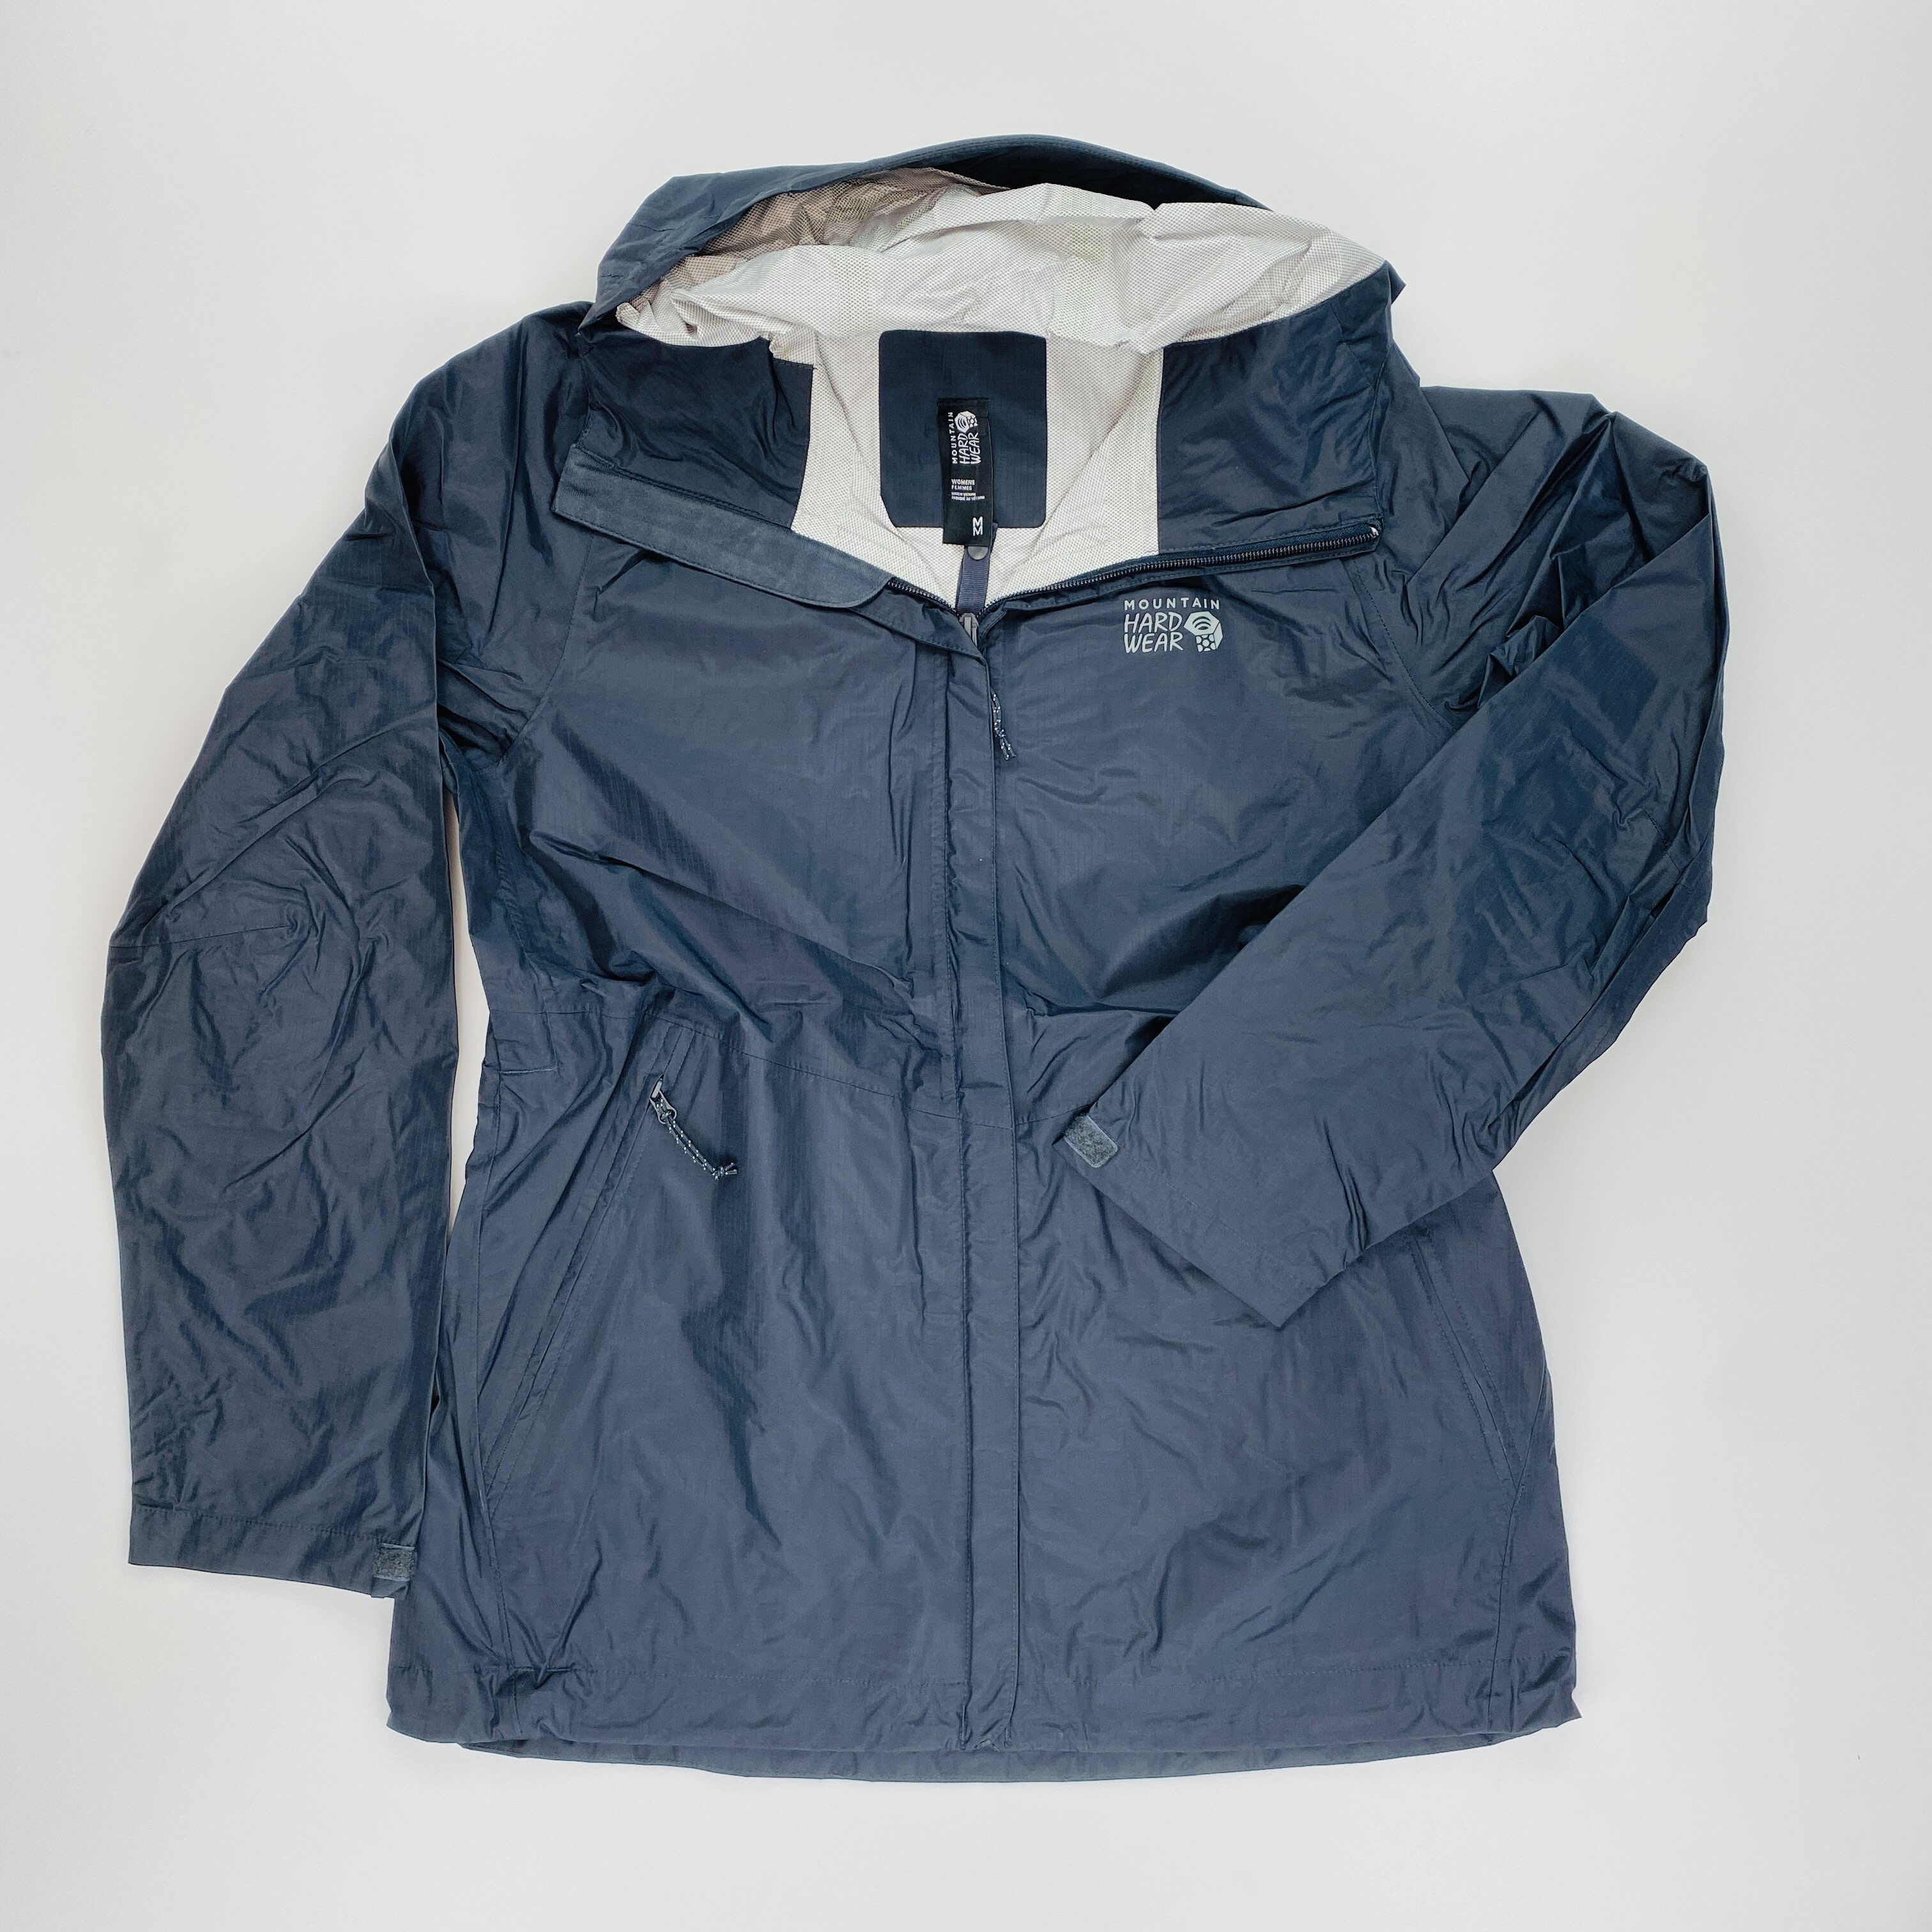 Mountain Hardwear Acadia Woman Jacket - Giacca antipioggia di seconda mano - Donna - Nero - M | Hardloop